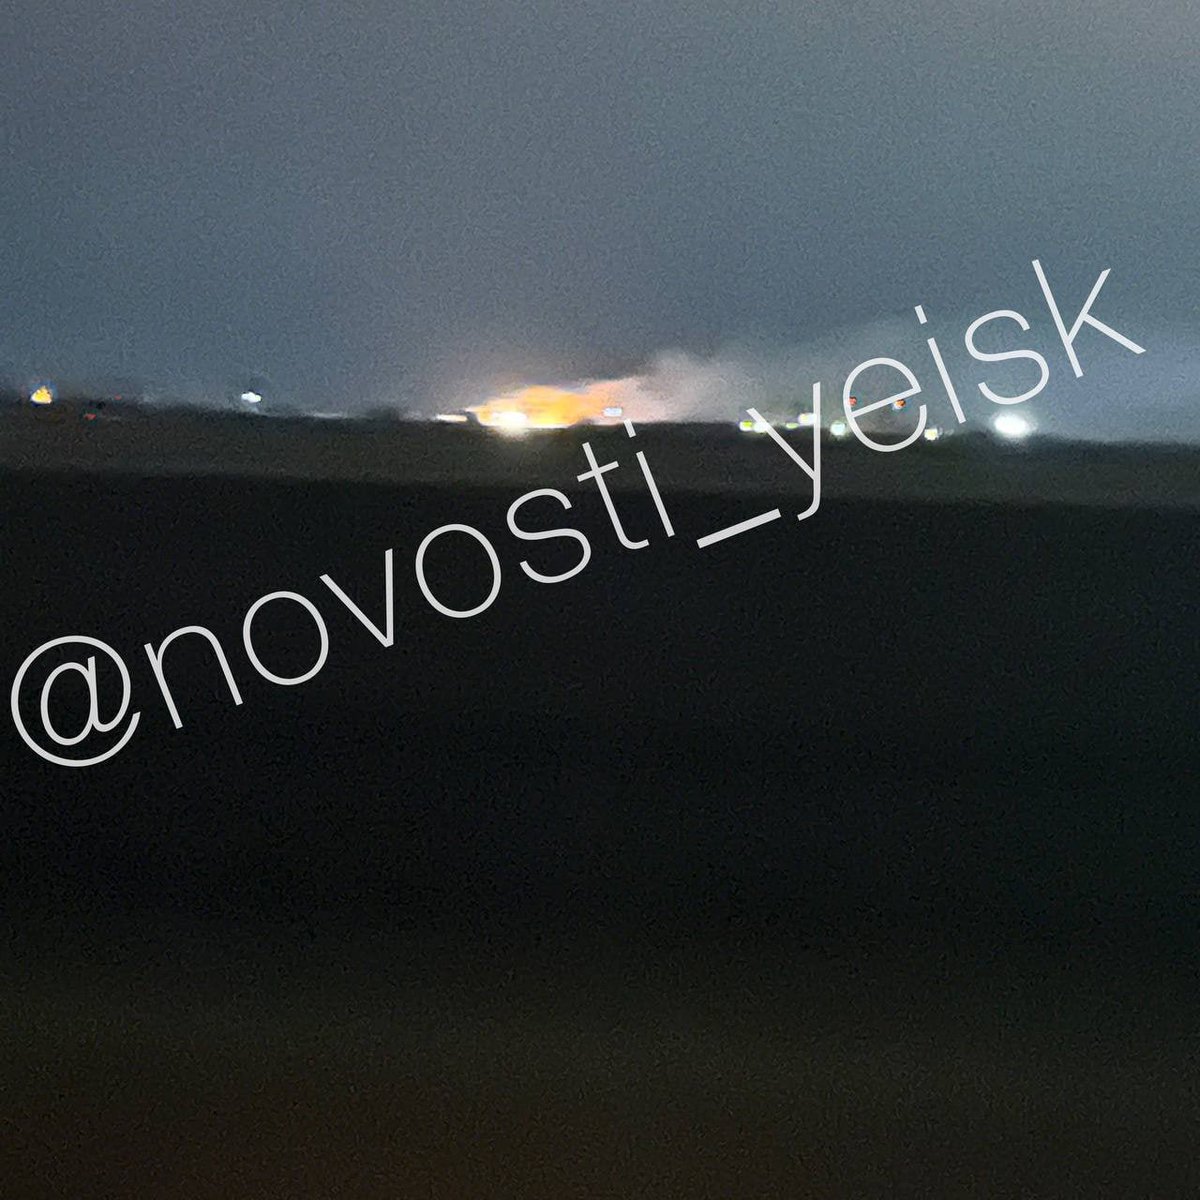 Fire and explosions were reported near airbase in Yeysk, Krasnodar Krai